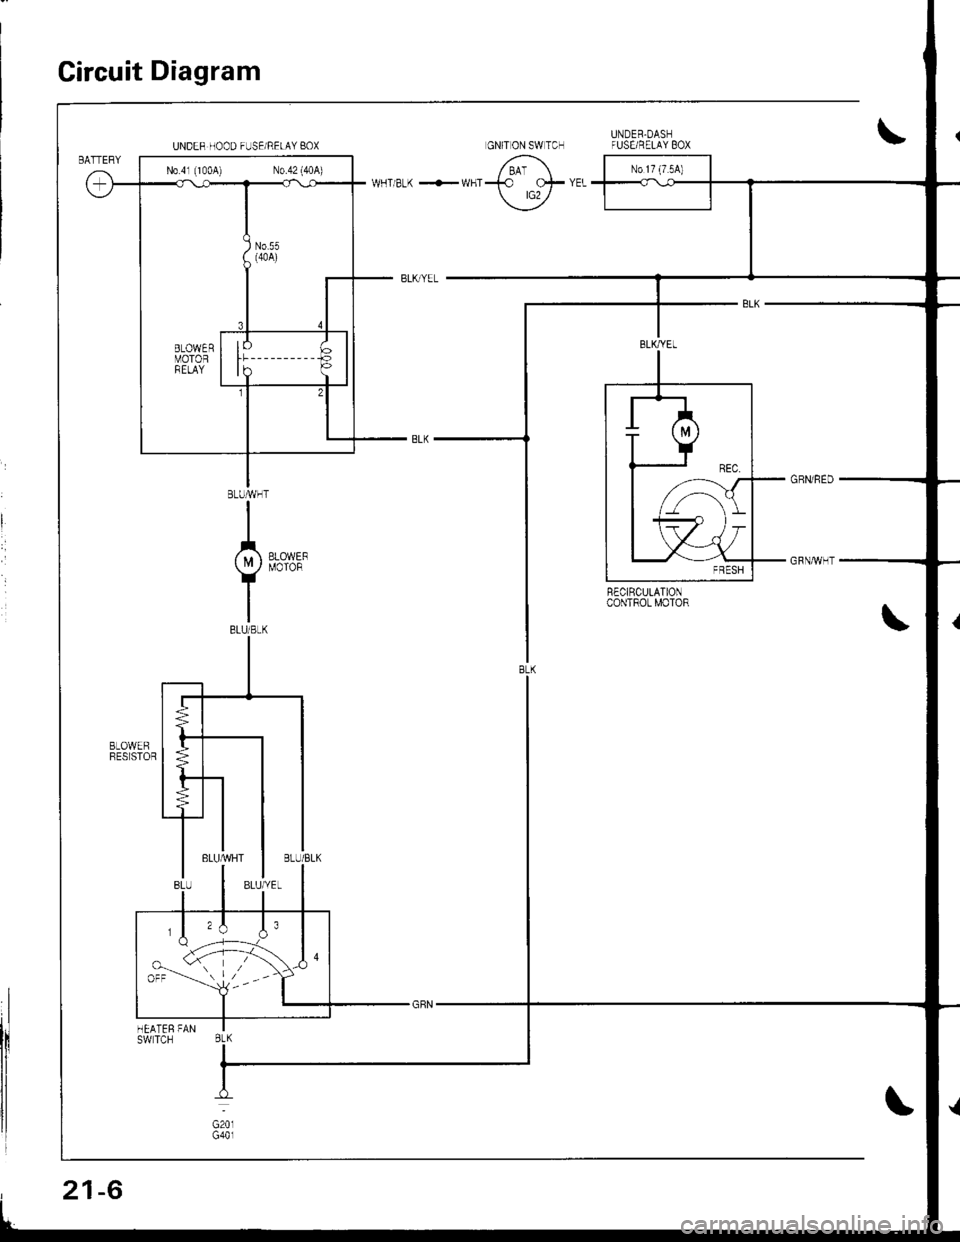 HONDA INTEGRA 1998 4.G Workshop Manual Circuit Diagram
R€CIRCULATIONcoNTROt MOTOR
UNDER HOOD FUSE/RELAY BOX
N0.41 (1004) N0.42 (40A)
,,\J.orr ---- l,--
BtK
21-6 